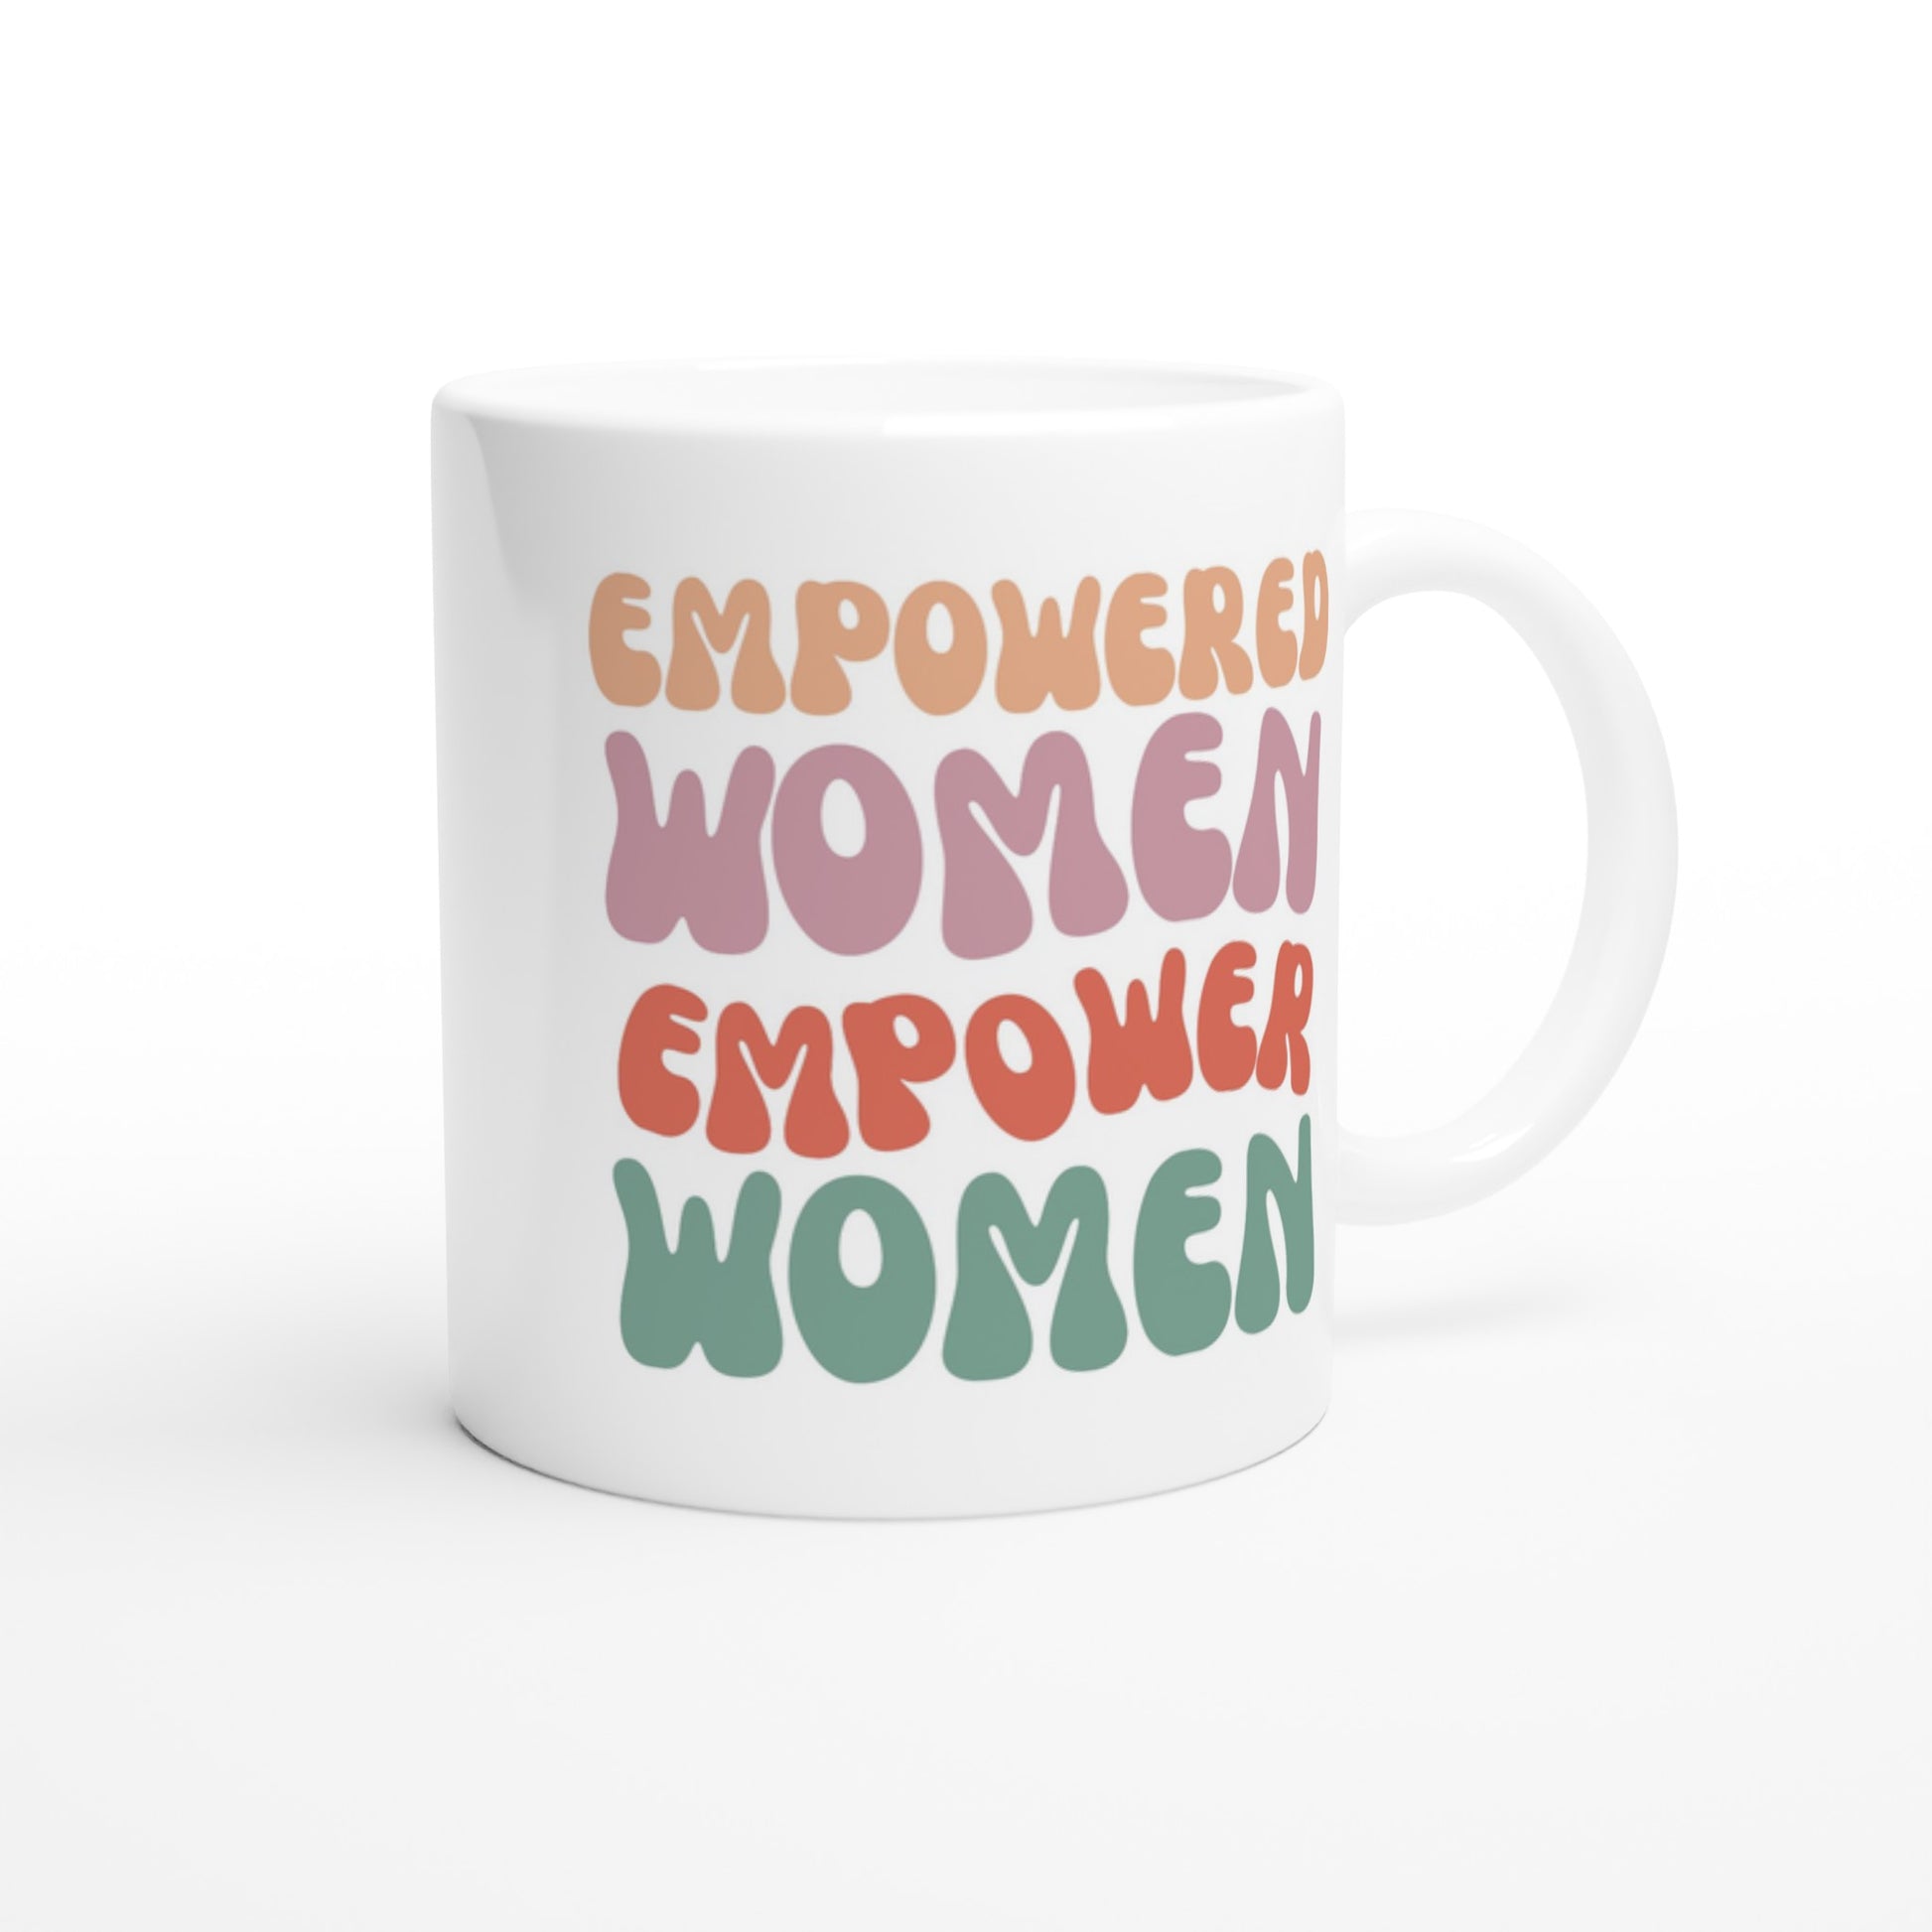 Empowered Women Empower Women - White 11oz Ceramic Mug White 11oz Mug Motivation Positivity